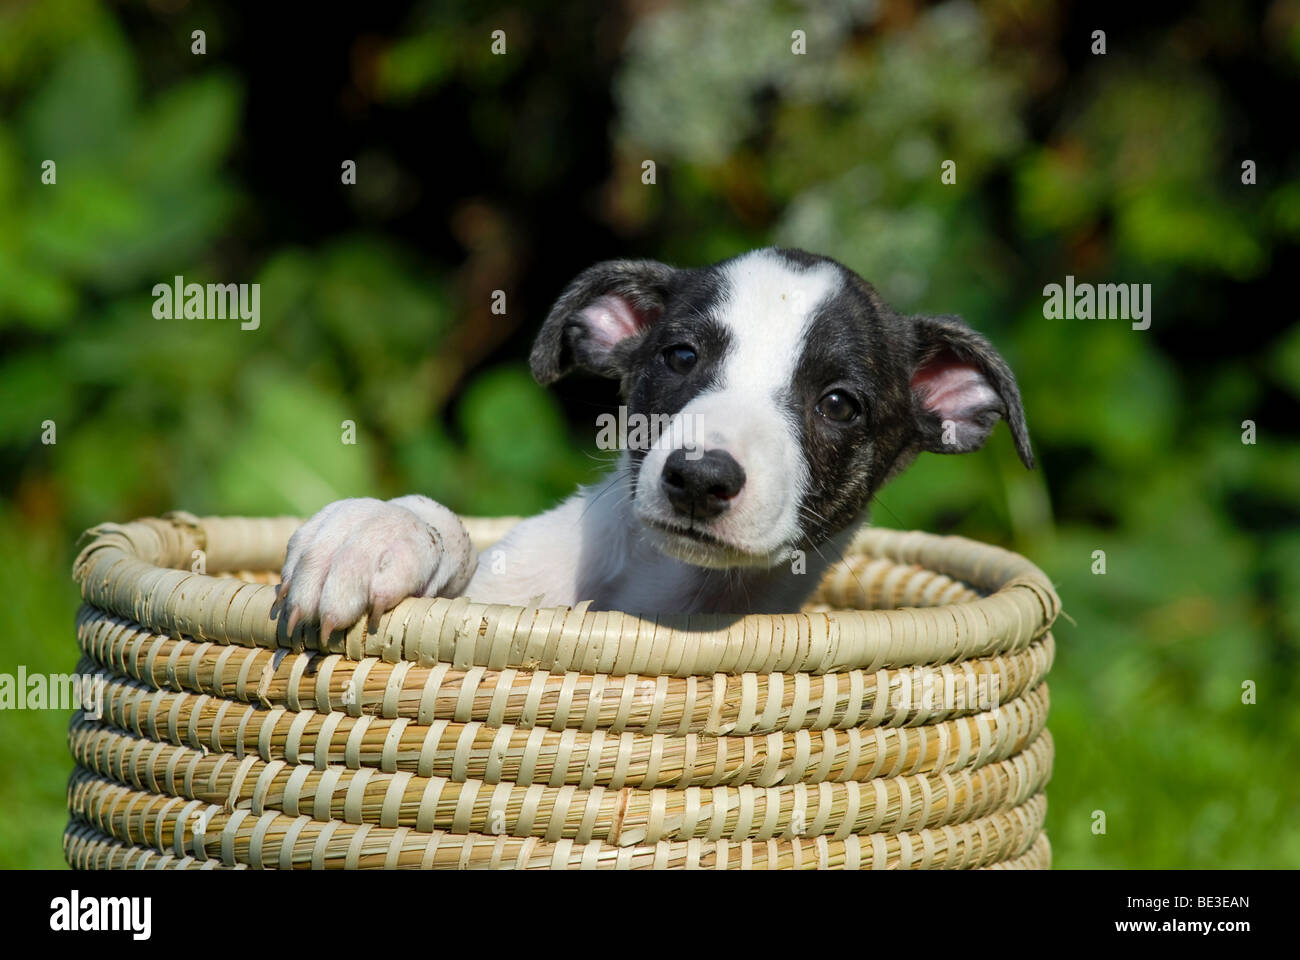 Magyar Agar, Hungarian Greyhound puppy, sitting in a wicker basket Stock Photo